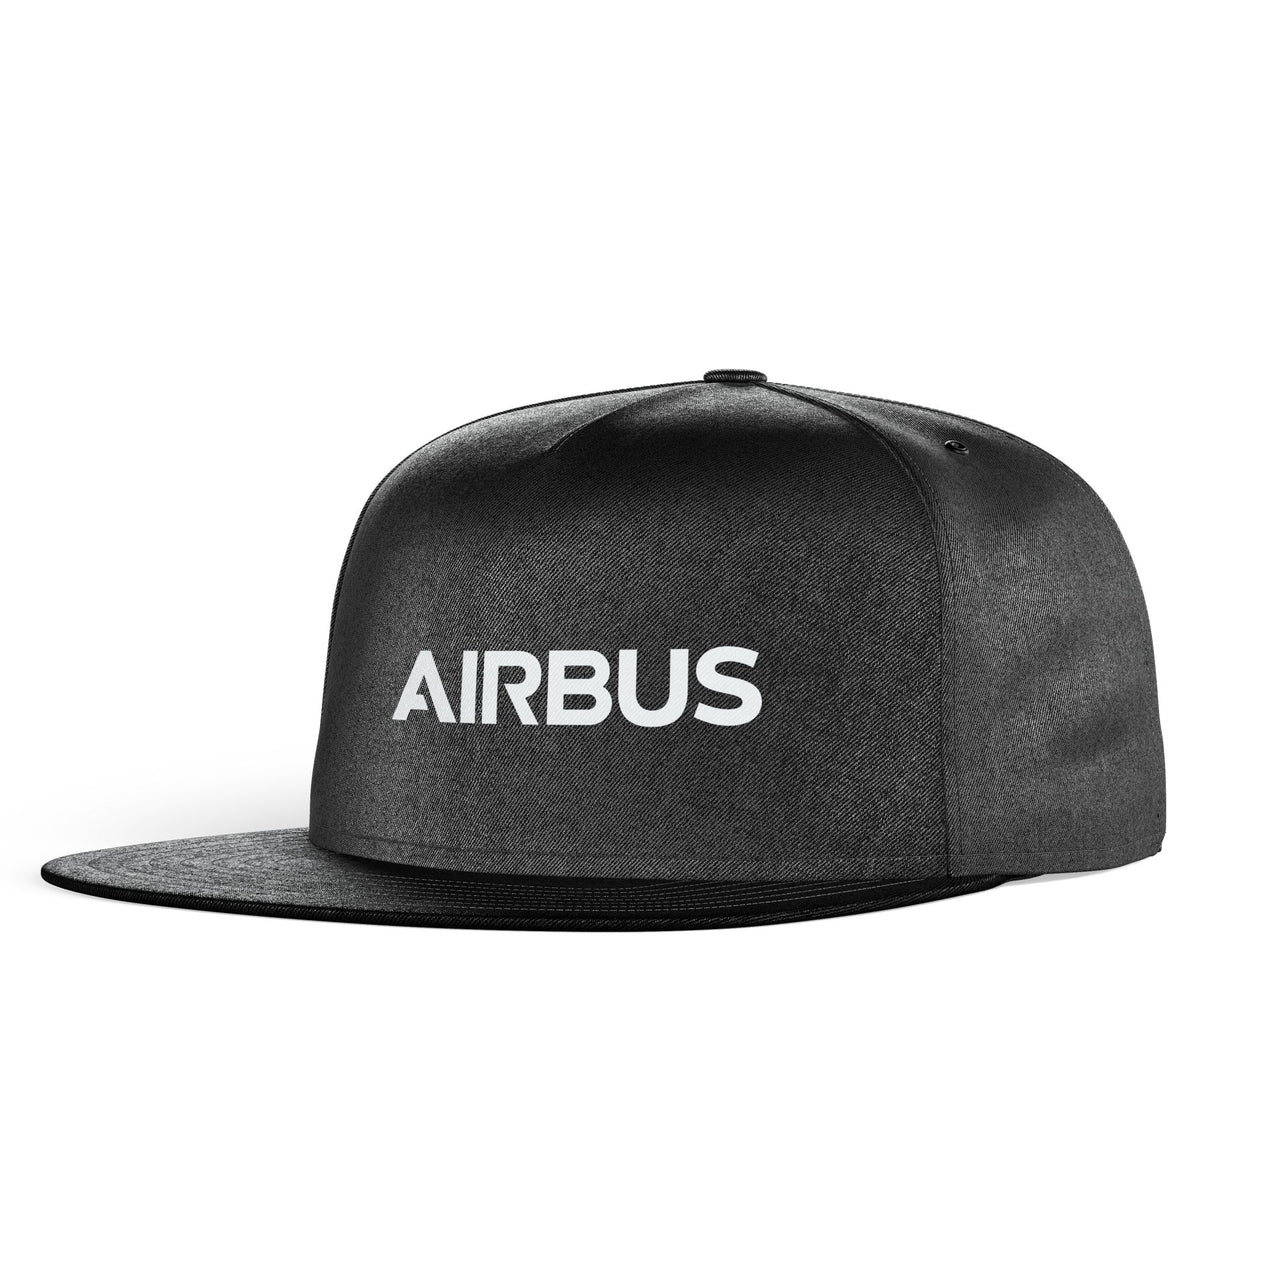 Airbus & Text Designed Snapback Caps & Hats